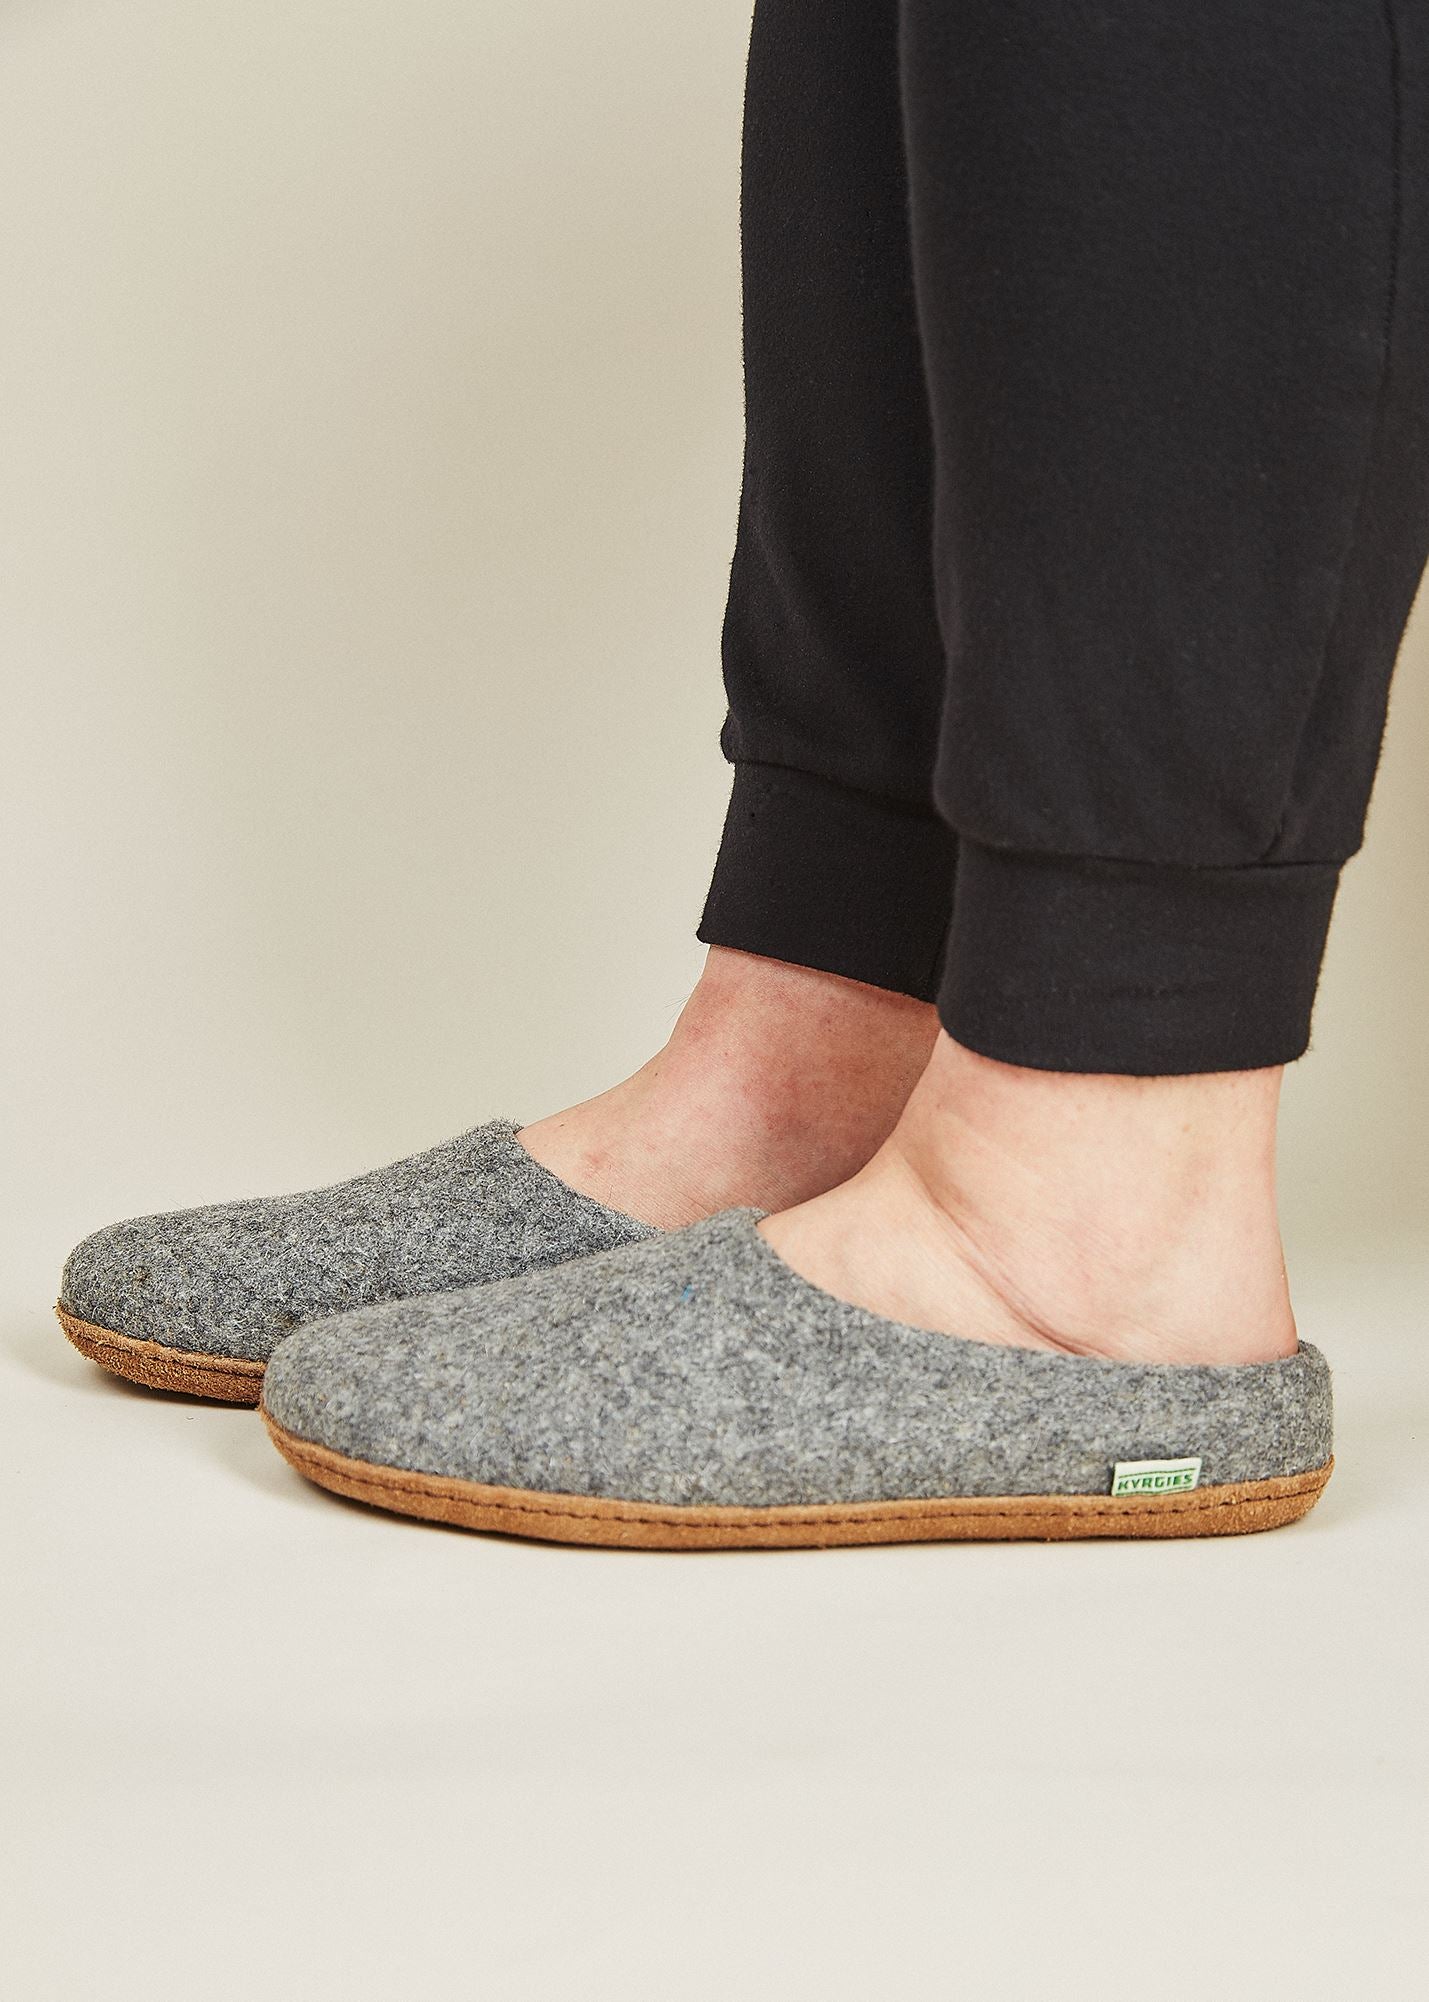 wool womens slippers